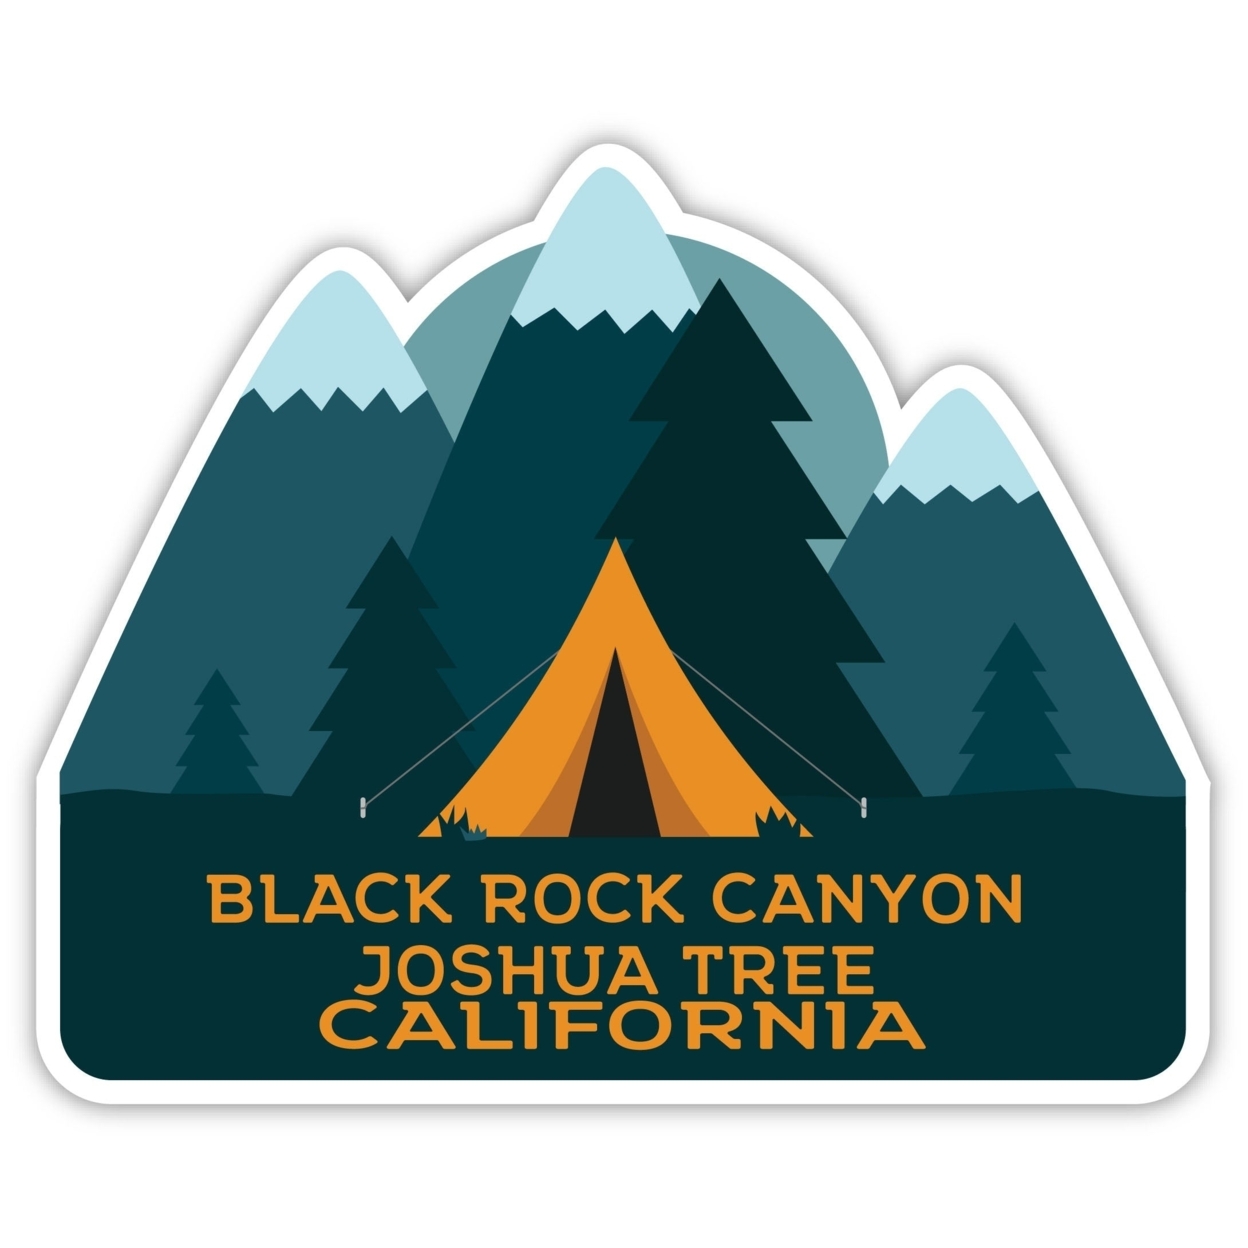 Black Rock Canyon Joshua Tree California Souvenir Decorative Stickers (Choose Theme And Size) - Single Unit, 12-Inch, Bear